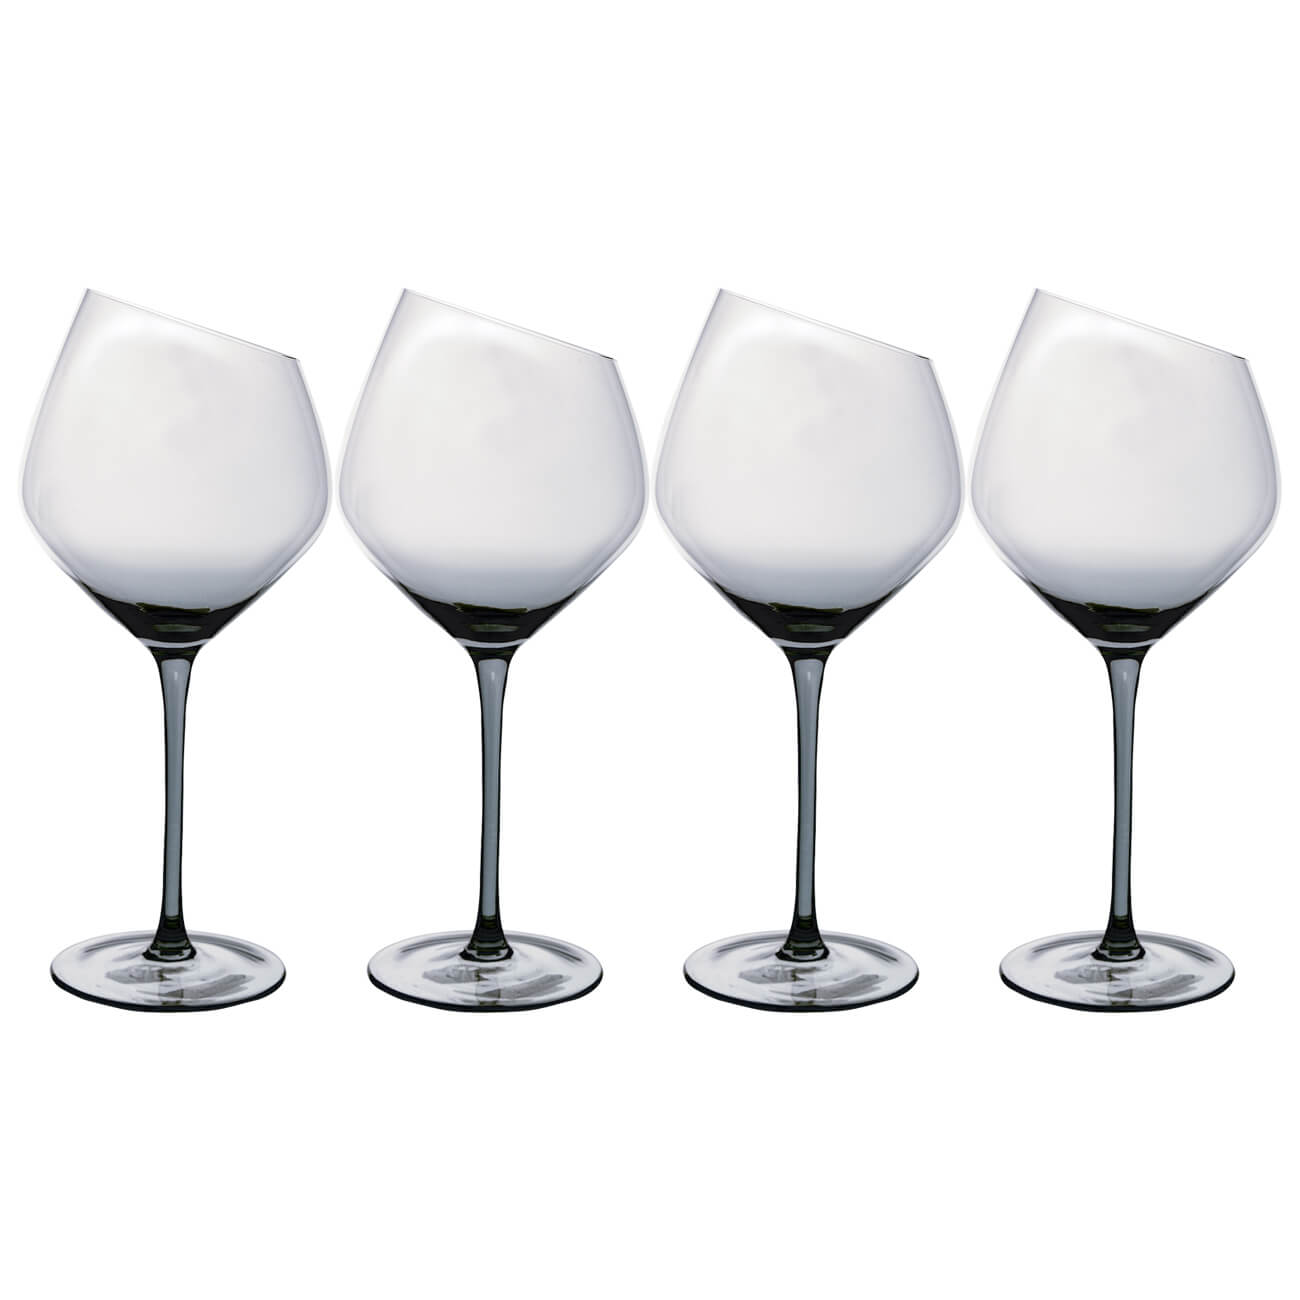 Бокал для красного вина, 560 мл, 4 шт, стекло, серый, Charm L Color уксус иберика 250 мл 6% из красного вина ст б